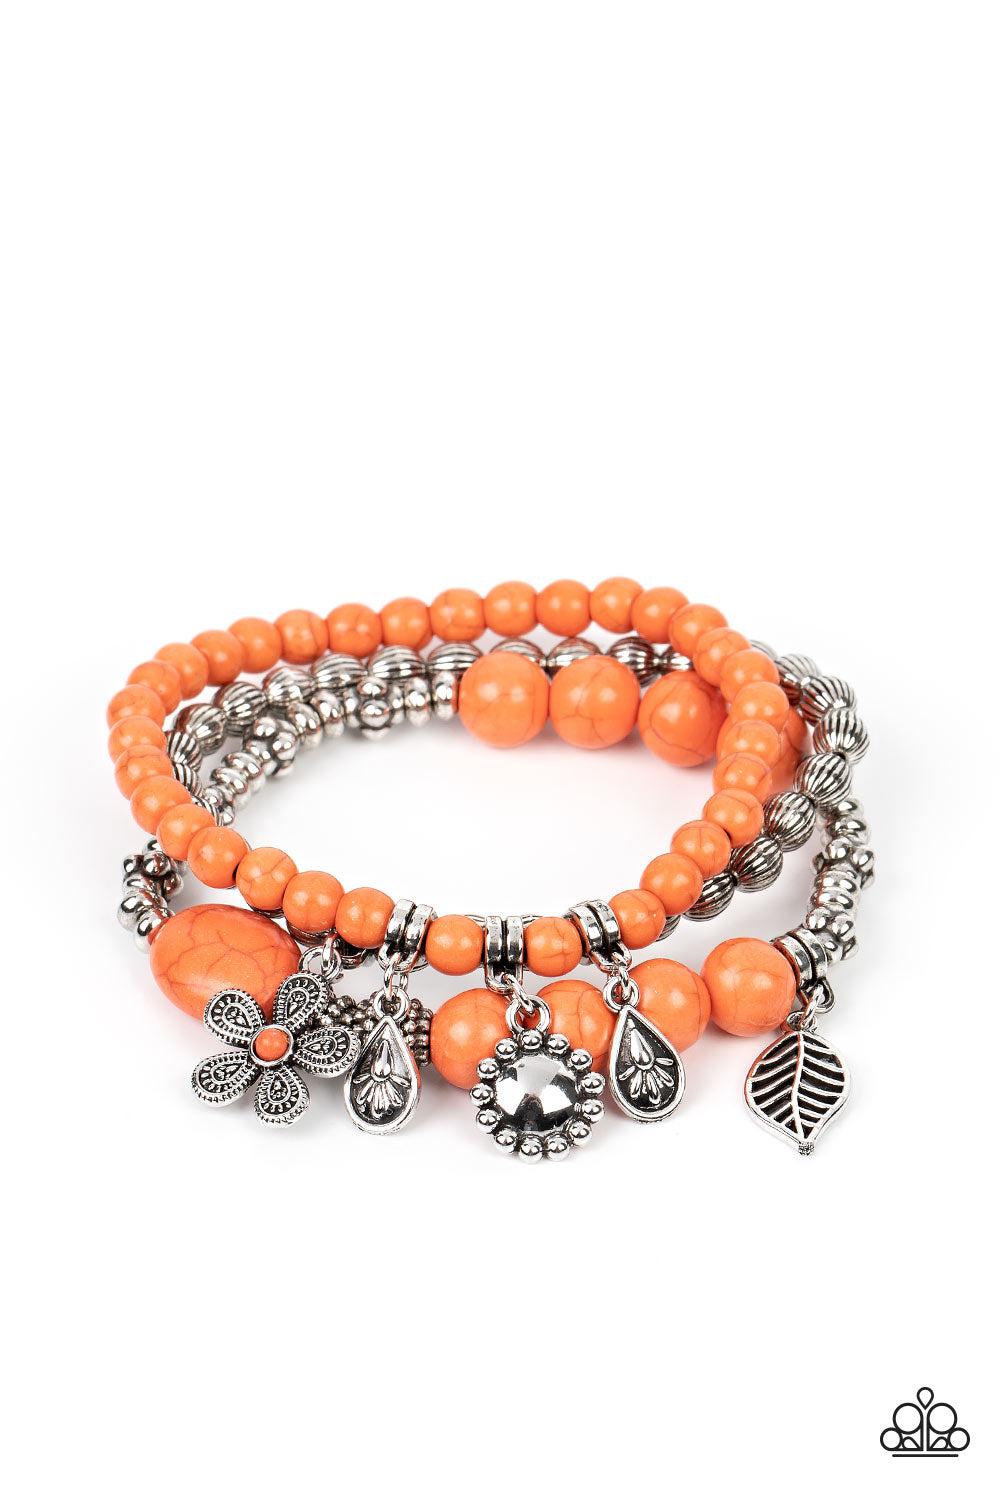 Individual Inflorescence Orange Bracelet - Paparazzi Accessories- lightbox - CarasShop.com - $5 Jewelry by Cara Jewels